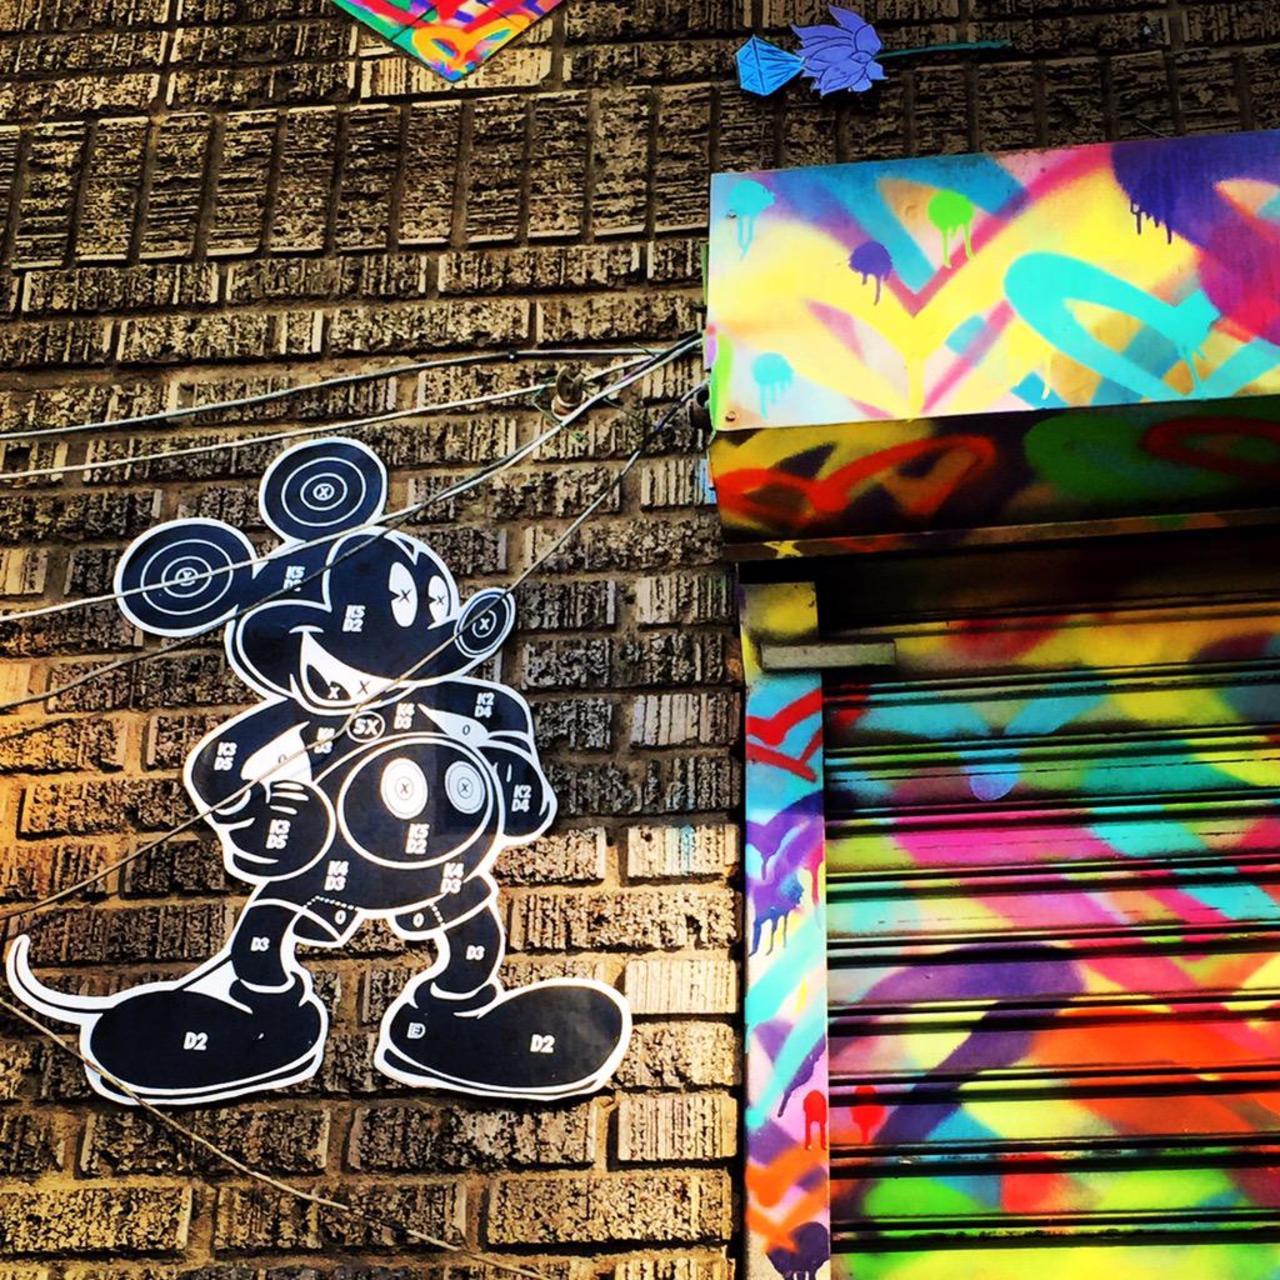 Color by Numbers #mickeymouse #disney #mickey #colors #graffiti #dtla #streetart #art #spraypaint #losangeles #dtla http://t.co/nyvBctoc8Q